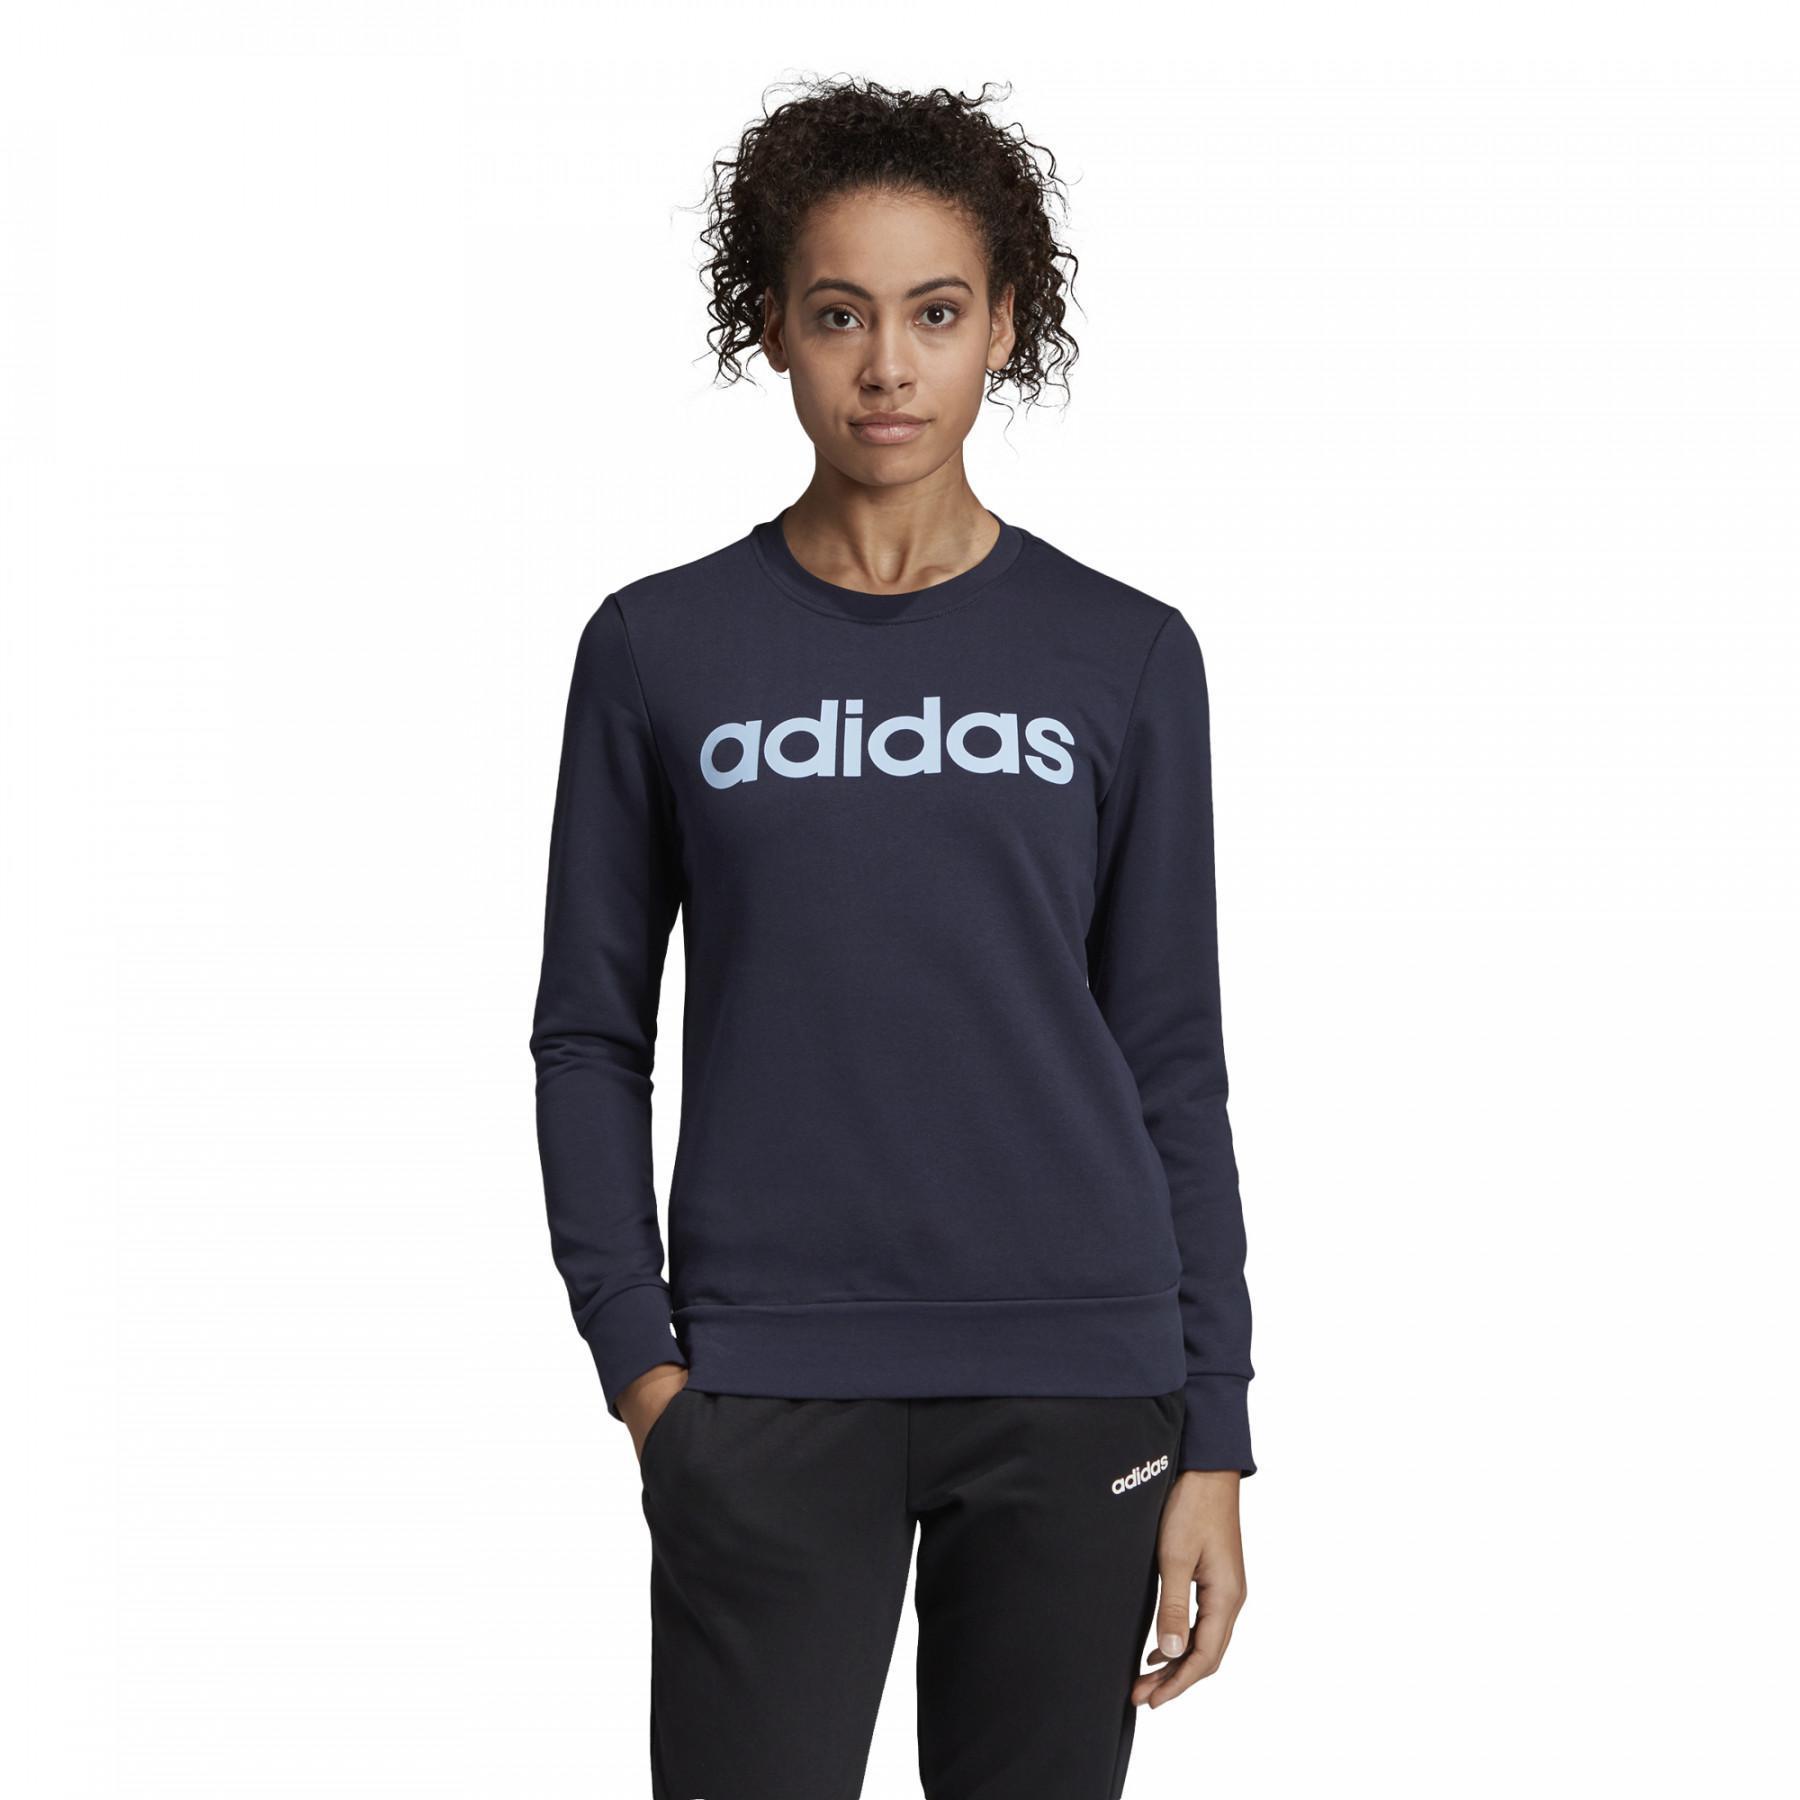 Women's sweatshirt adidas Essentials Linear - adidas - Brands - Handball  wear